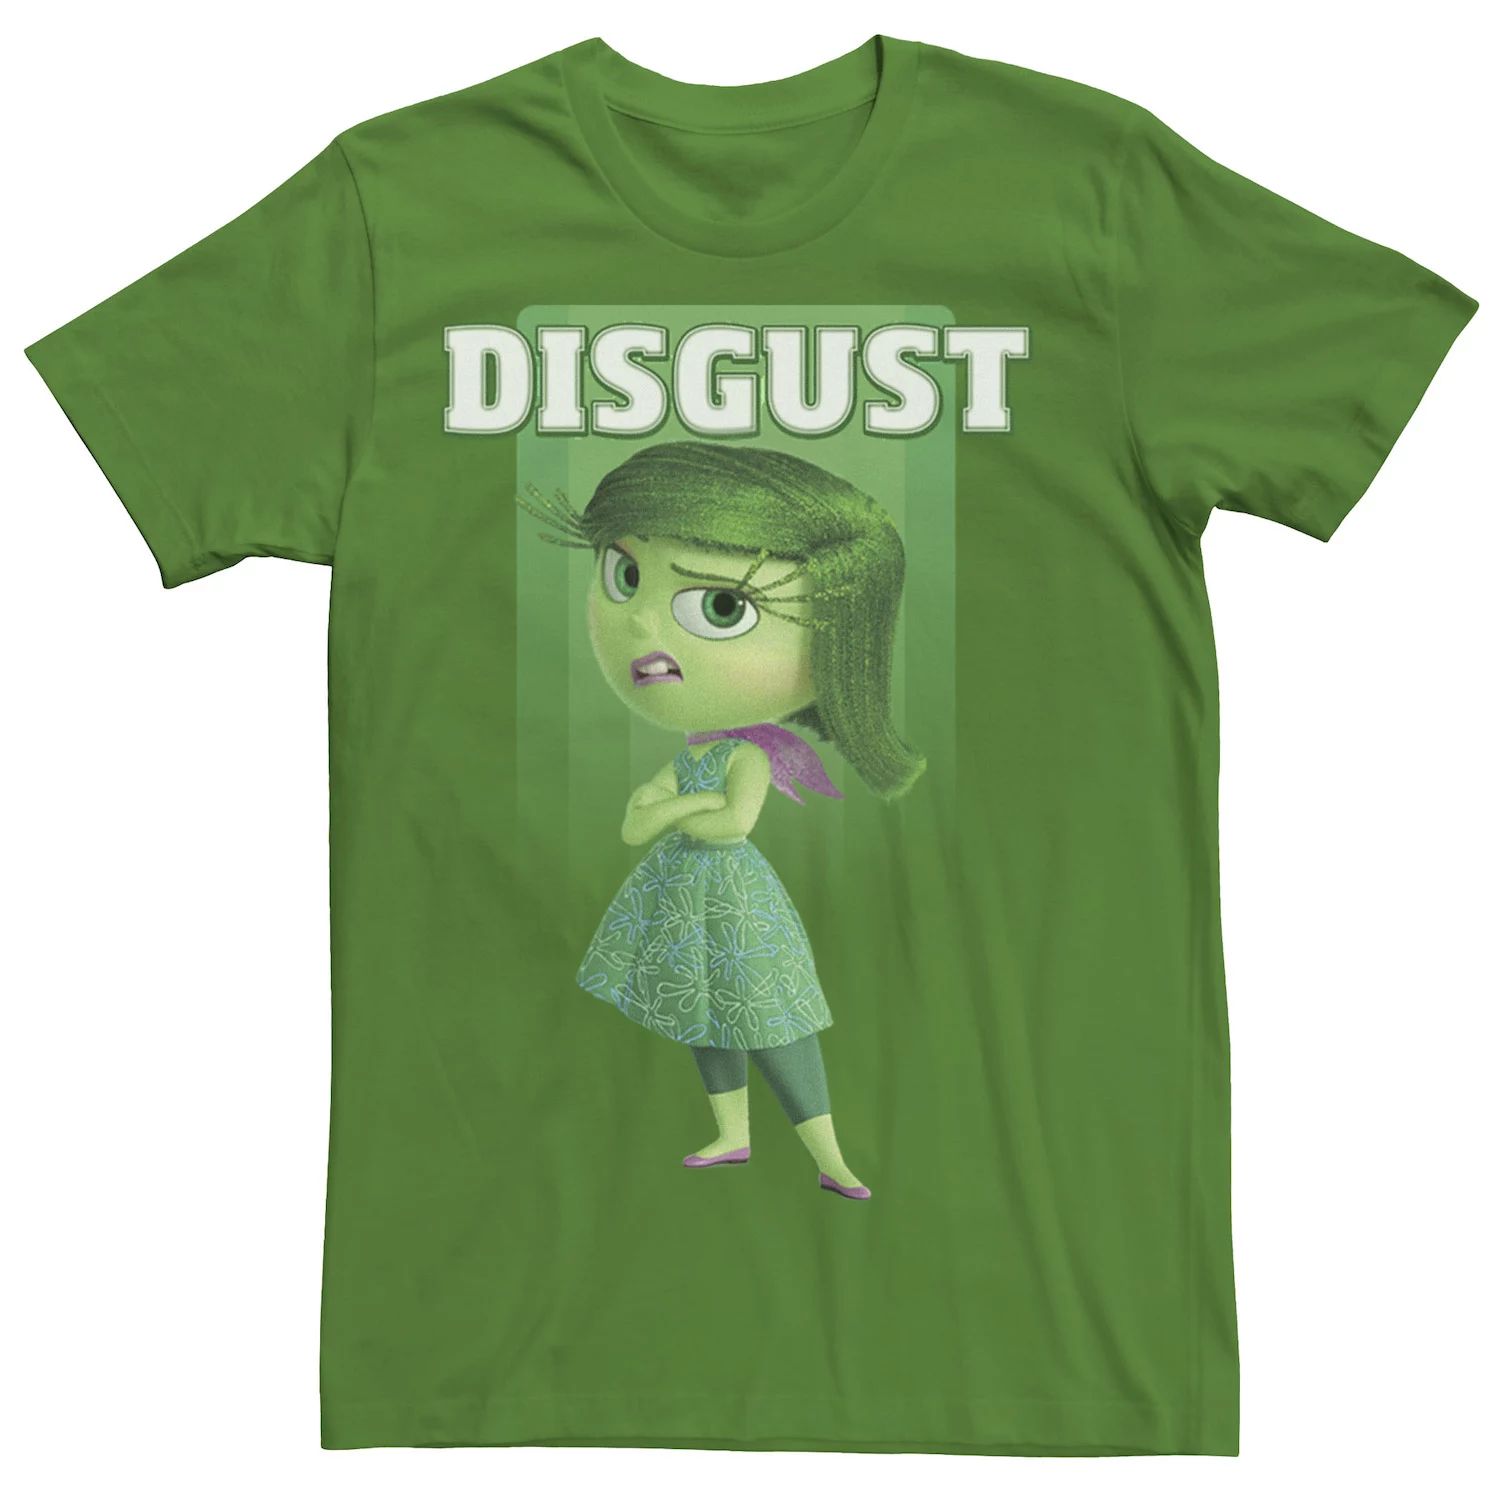 Мужская футболка с портретом Inside Out Disgust Disney / Pixar